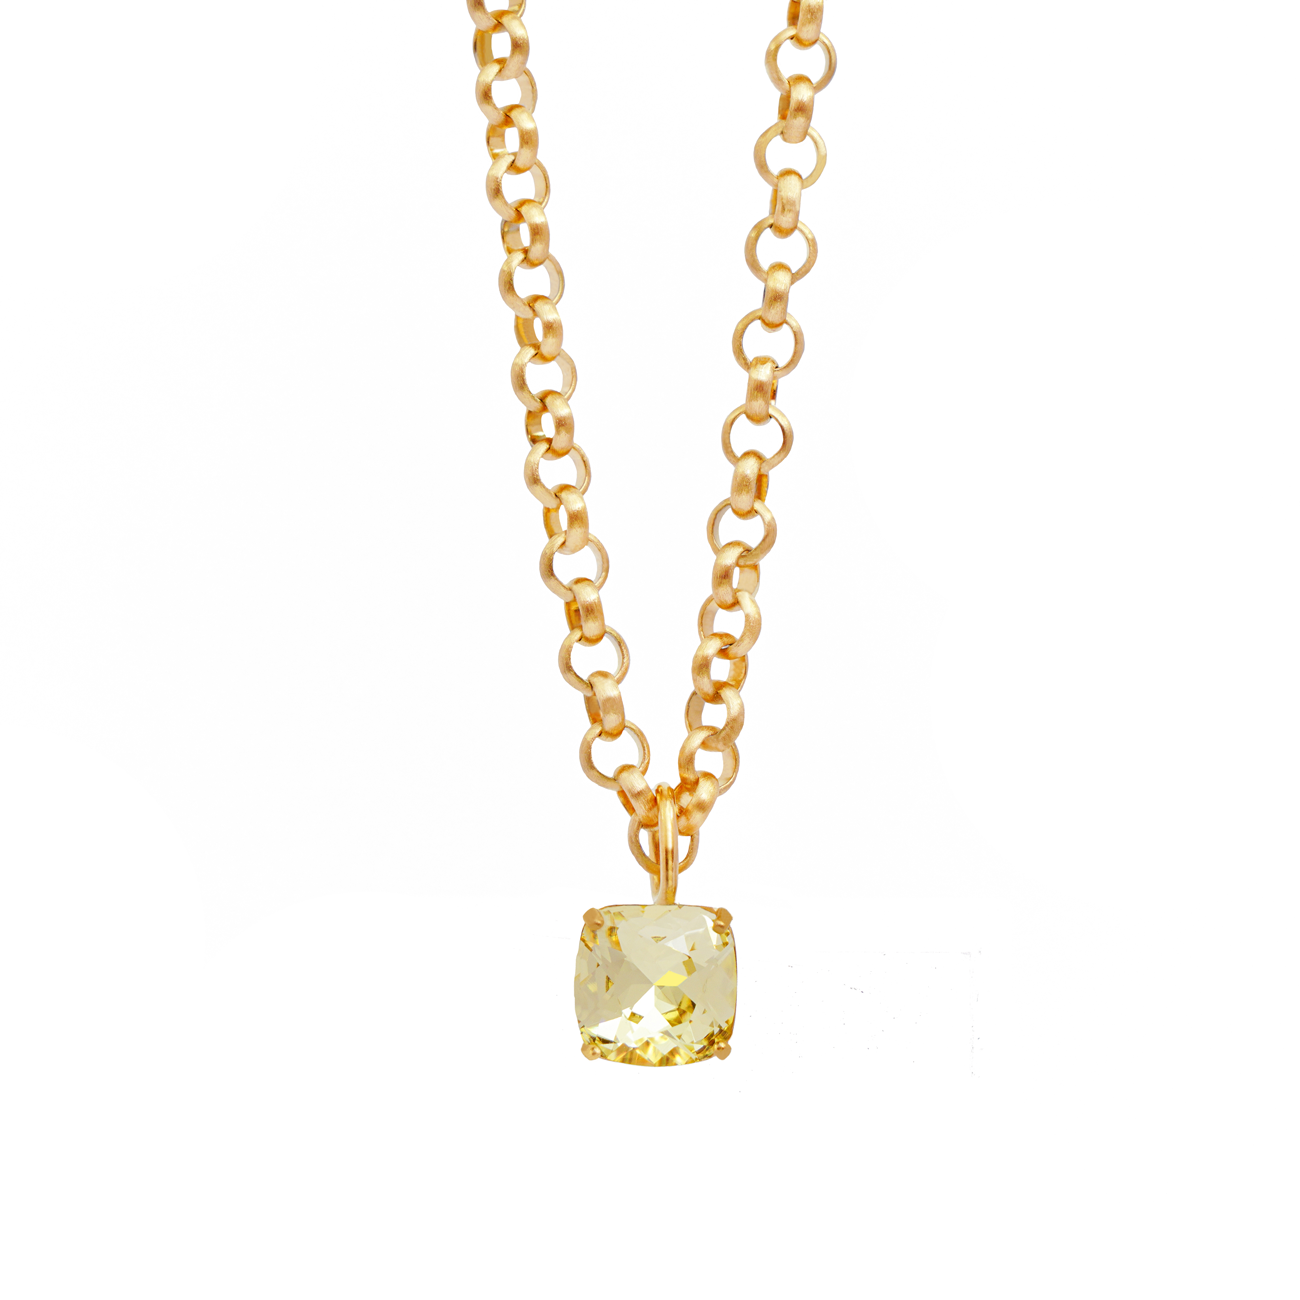 Carla Crystal chain necklace - Lemon